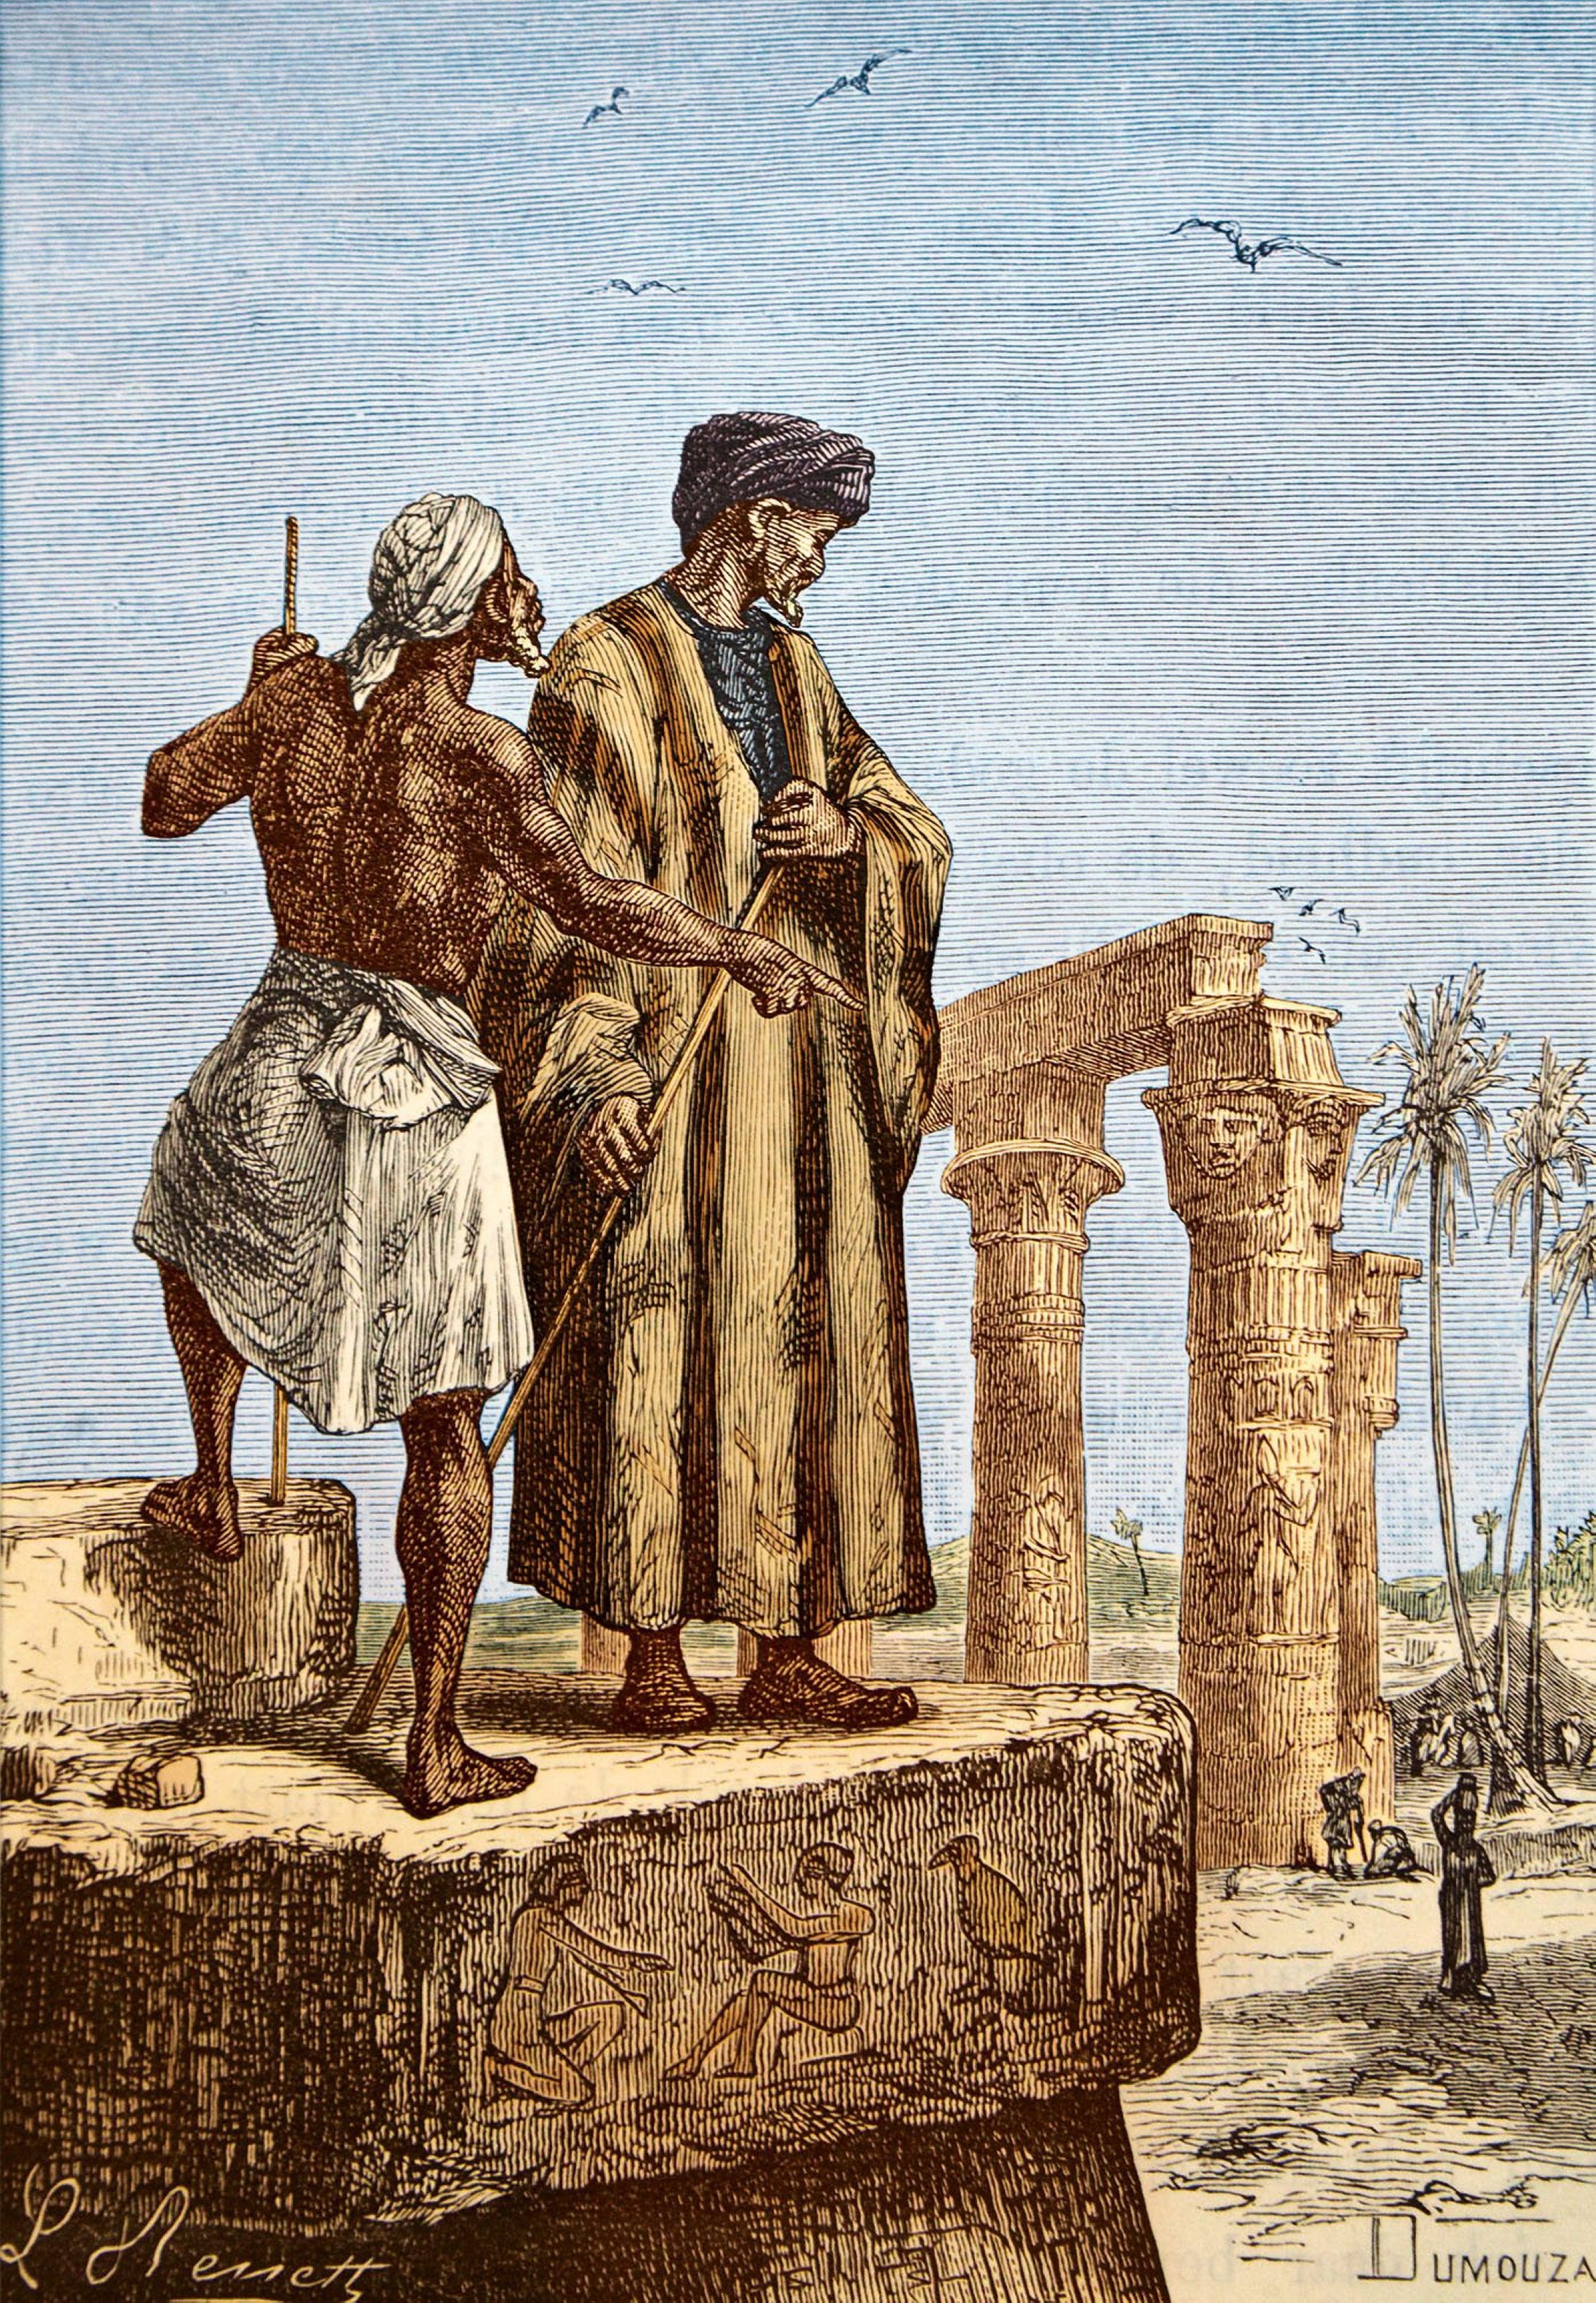 Penggambaran oleh Paul Dumouza dari abad ke-19 menunjukkan Ibnu Battuta di Mesir.  (Foto Getty Images)